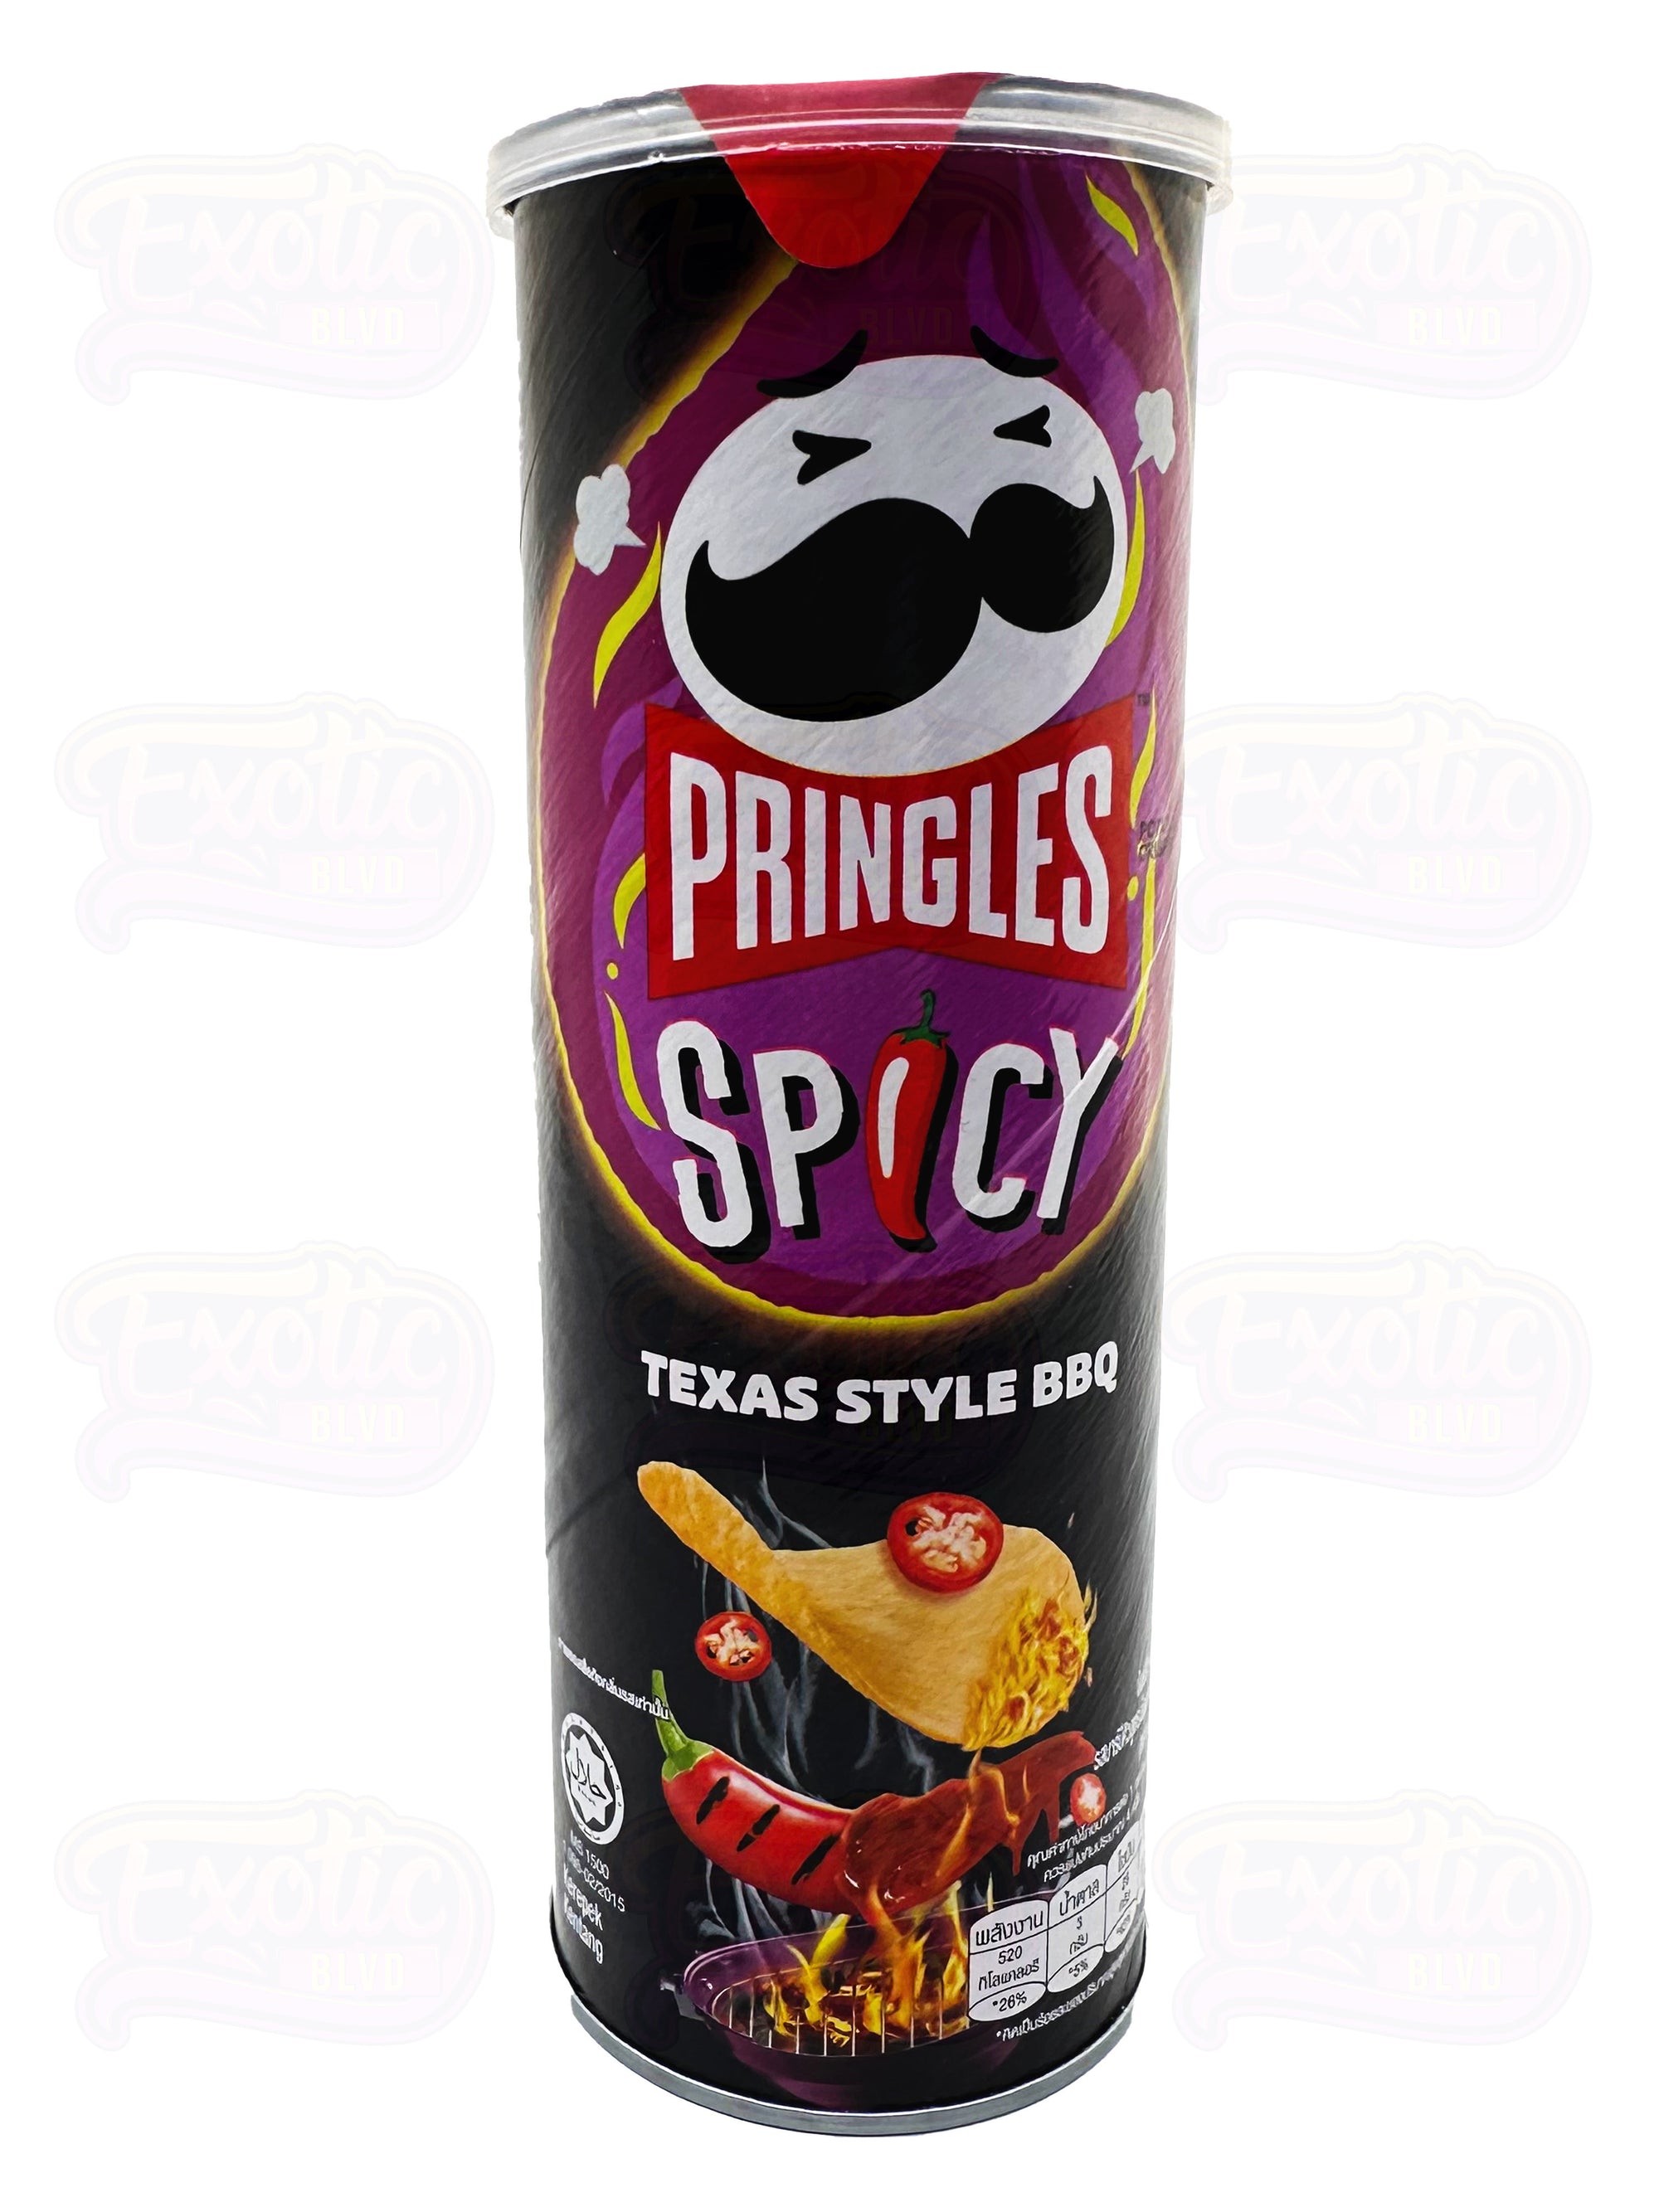 Pringles Spicy Texas BBQ